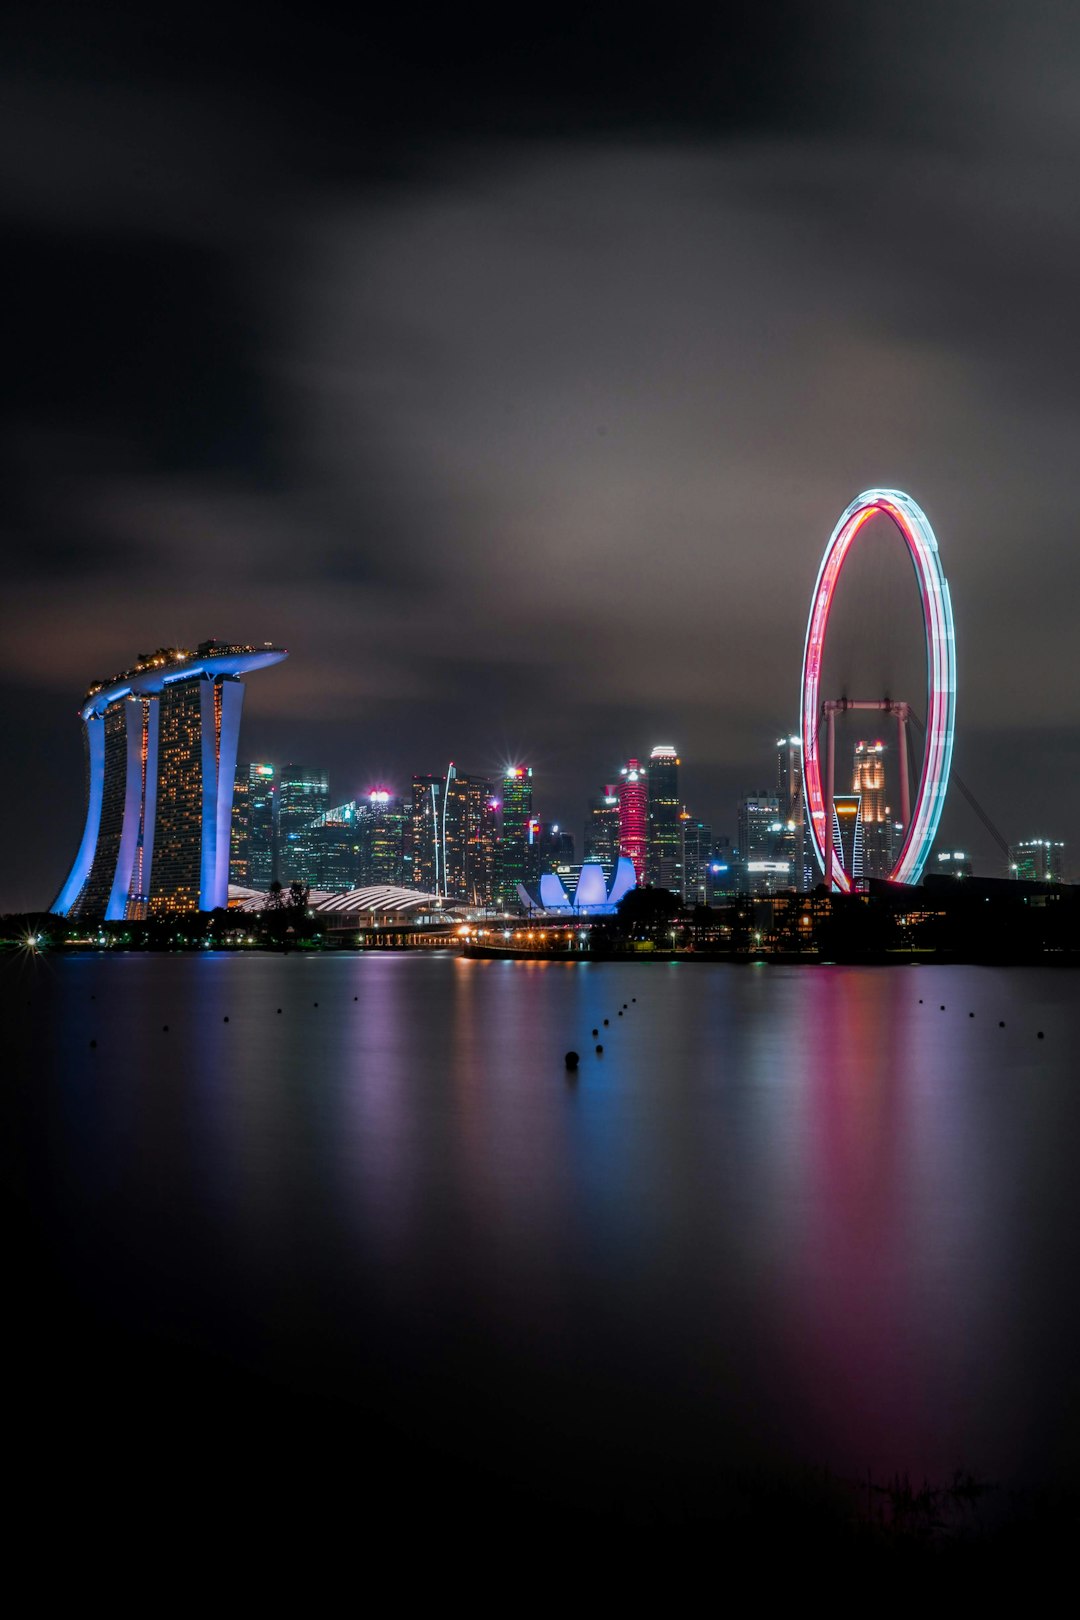 Marina Bay Sands Singapore during nighttime